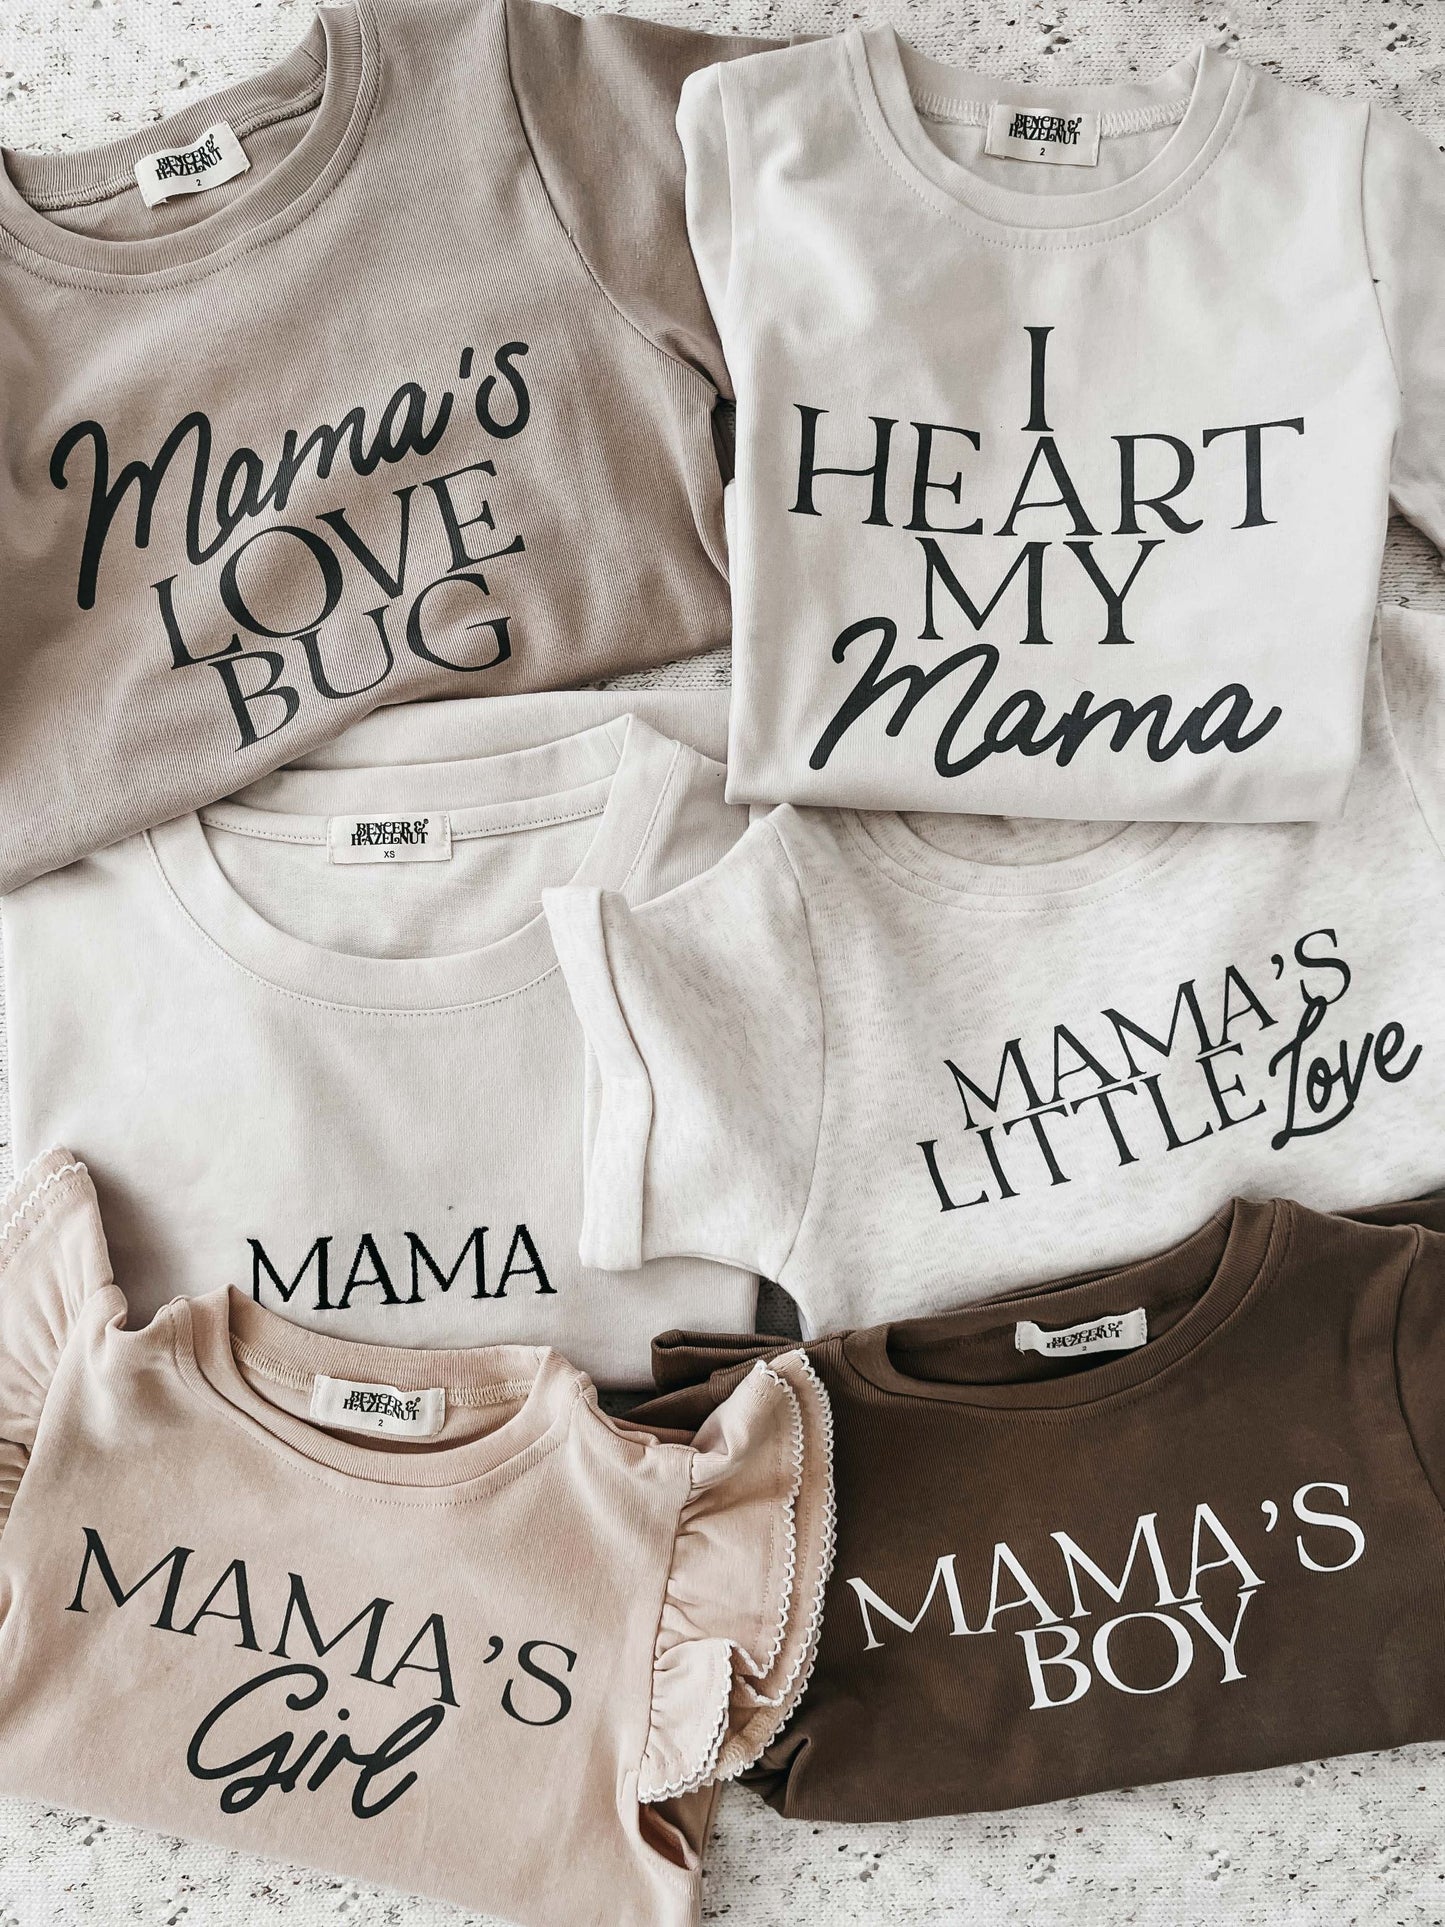 Mama's Little Love Bodysuit/Tee